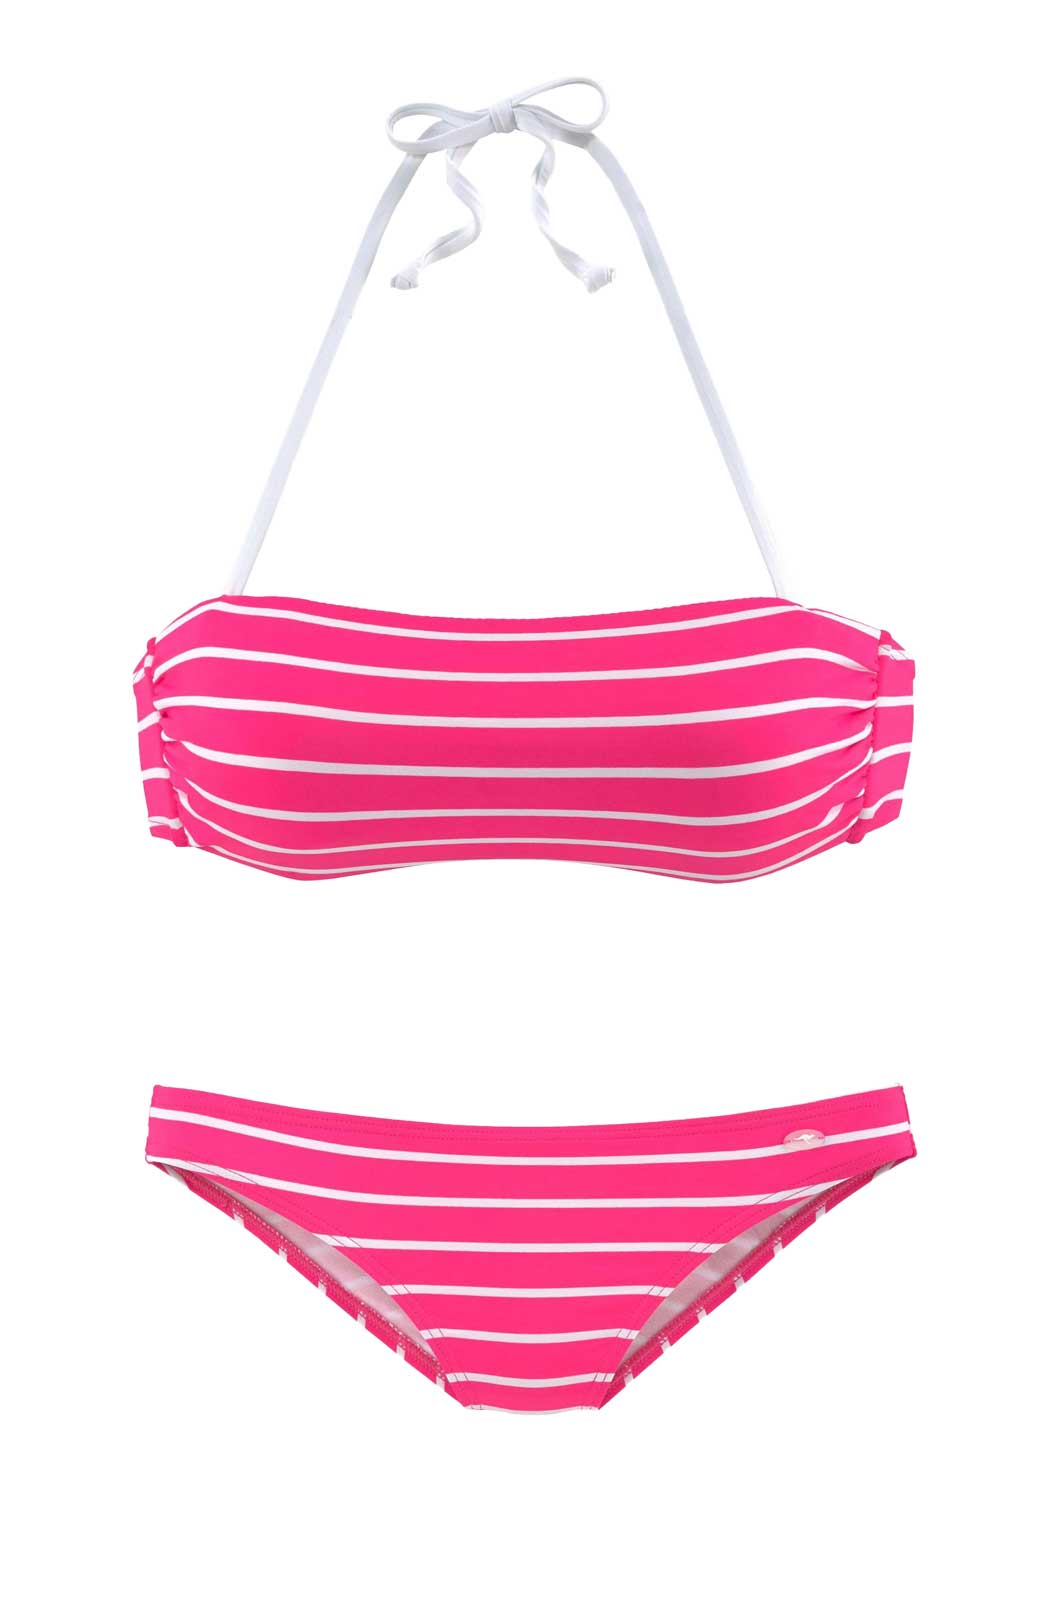 Kangaroos Damen Marken-Bandeau-Bikini, pink-weiß, C/D-Cup